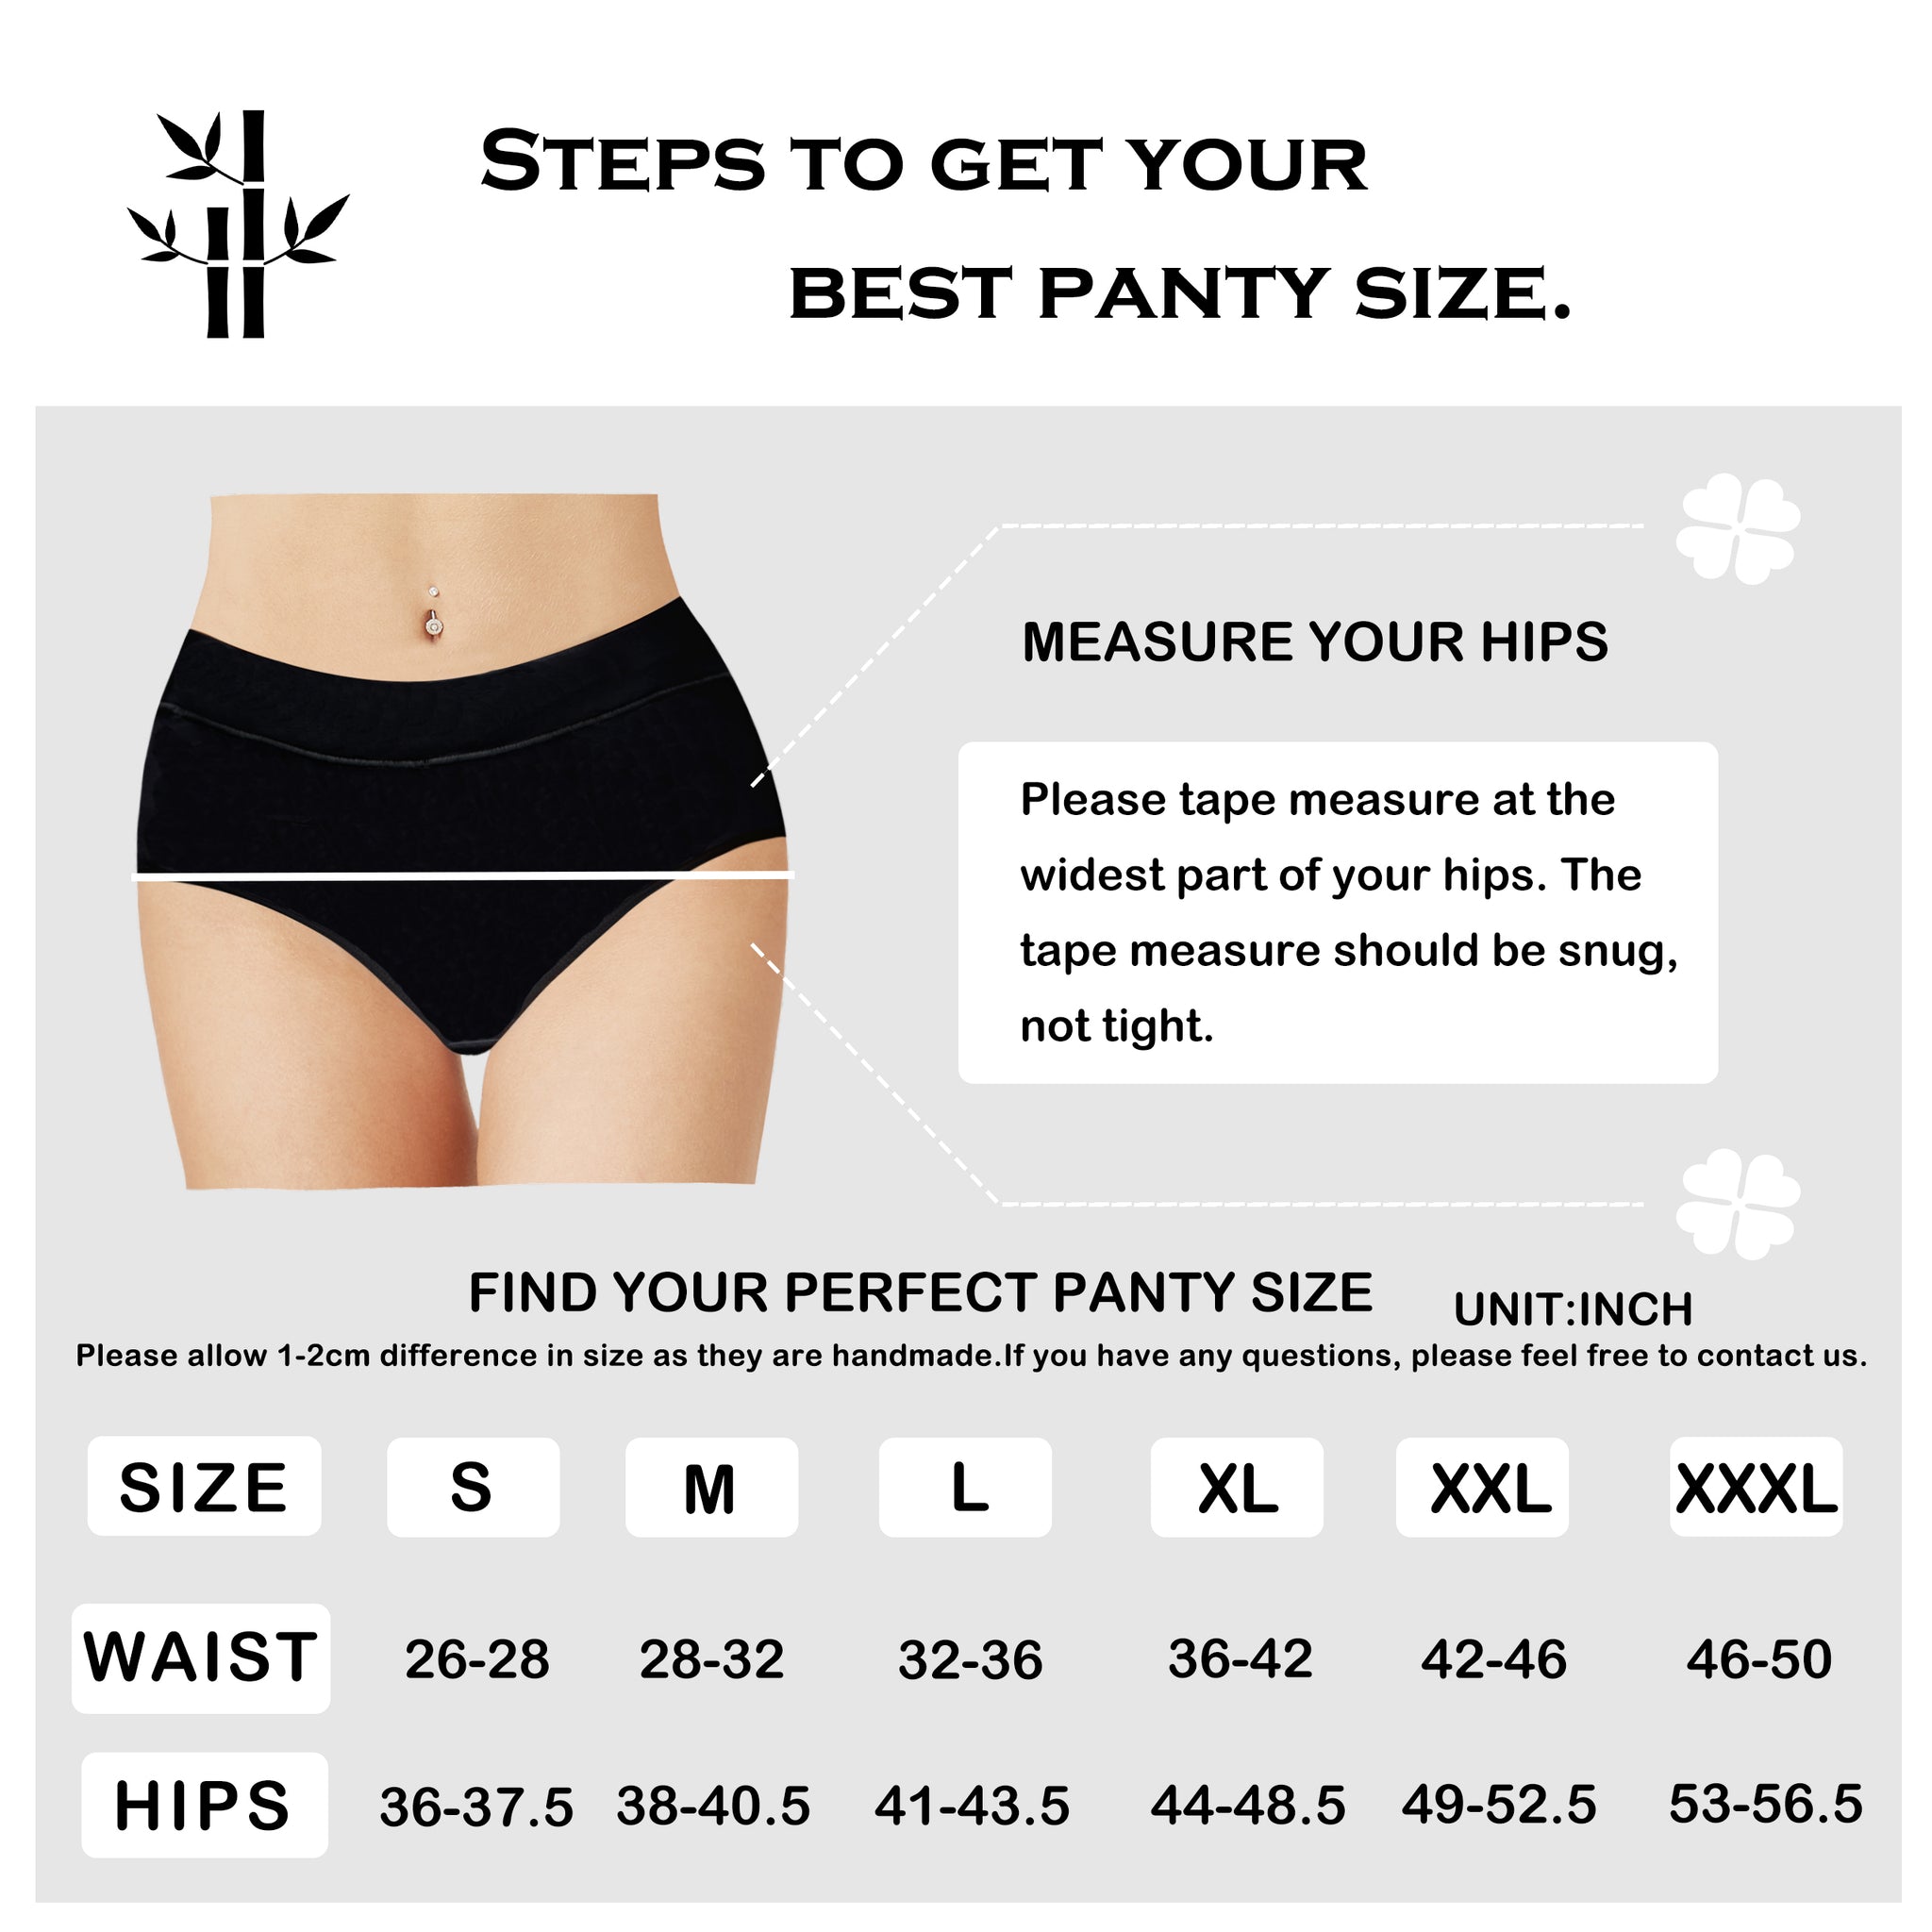 Bamboo Fiber Women Luxury Underwear Silky Ultra Soft Briefs Breathable Stretch High Waist Panties 4 pack